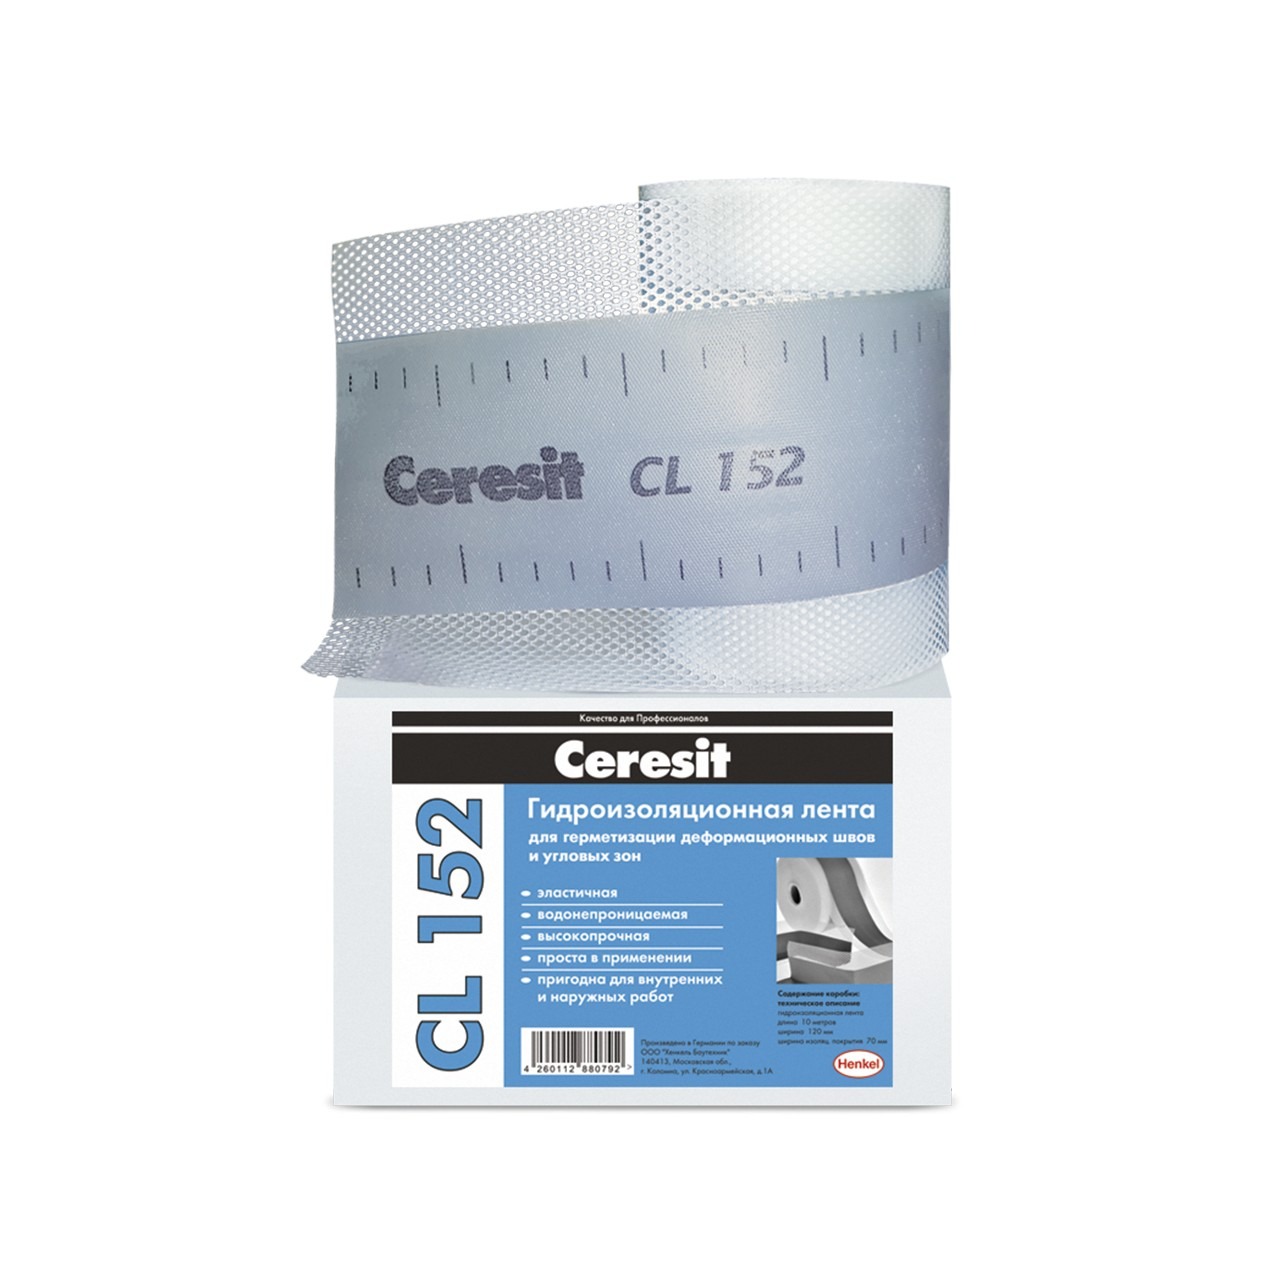 Ceresit CL152 Лента для гидроизоляции, 10m, синяя